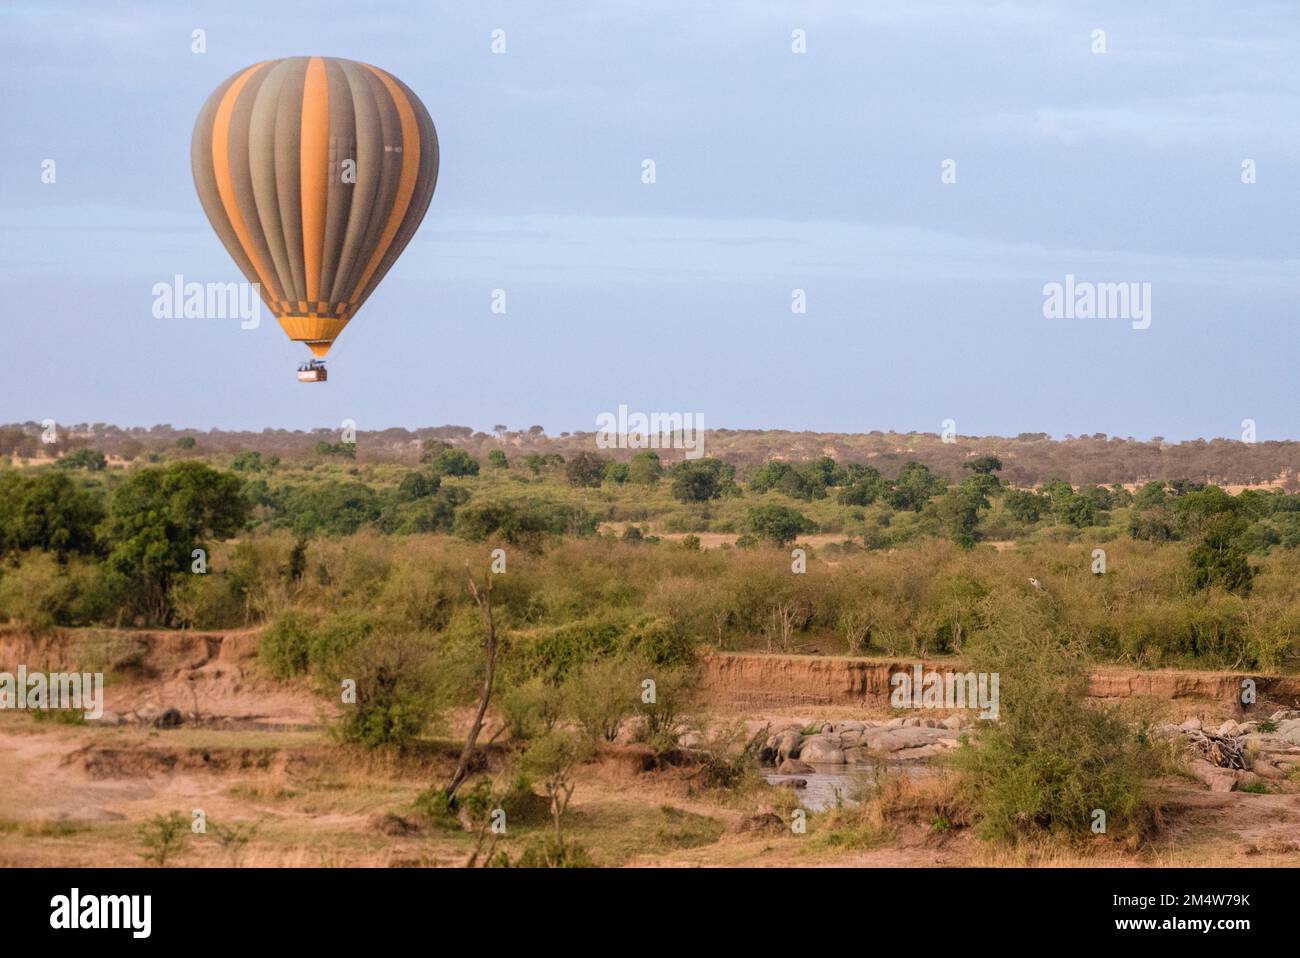 Hot air balloon over the Serengeti National Park in Tanzania Stock Photo